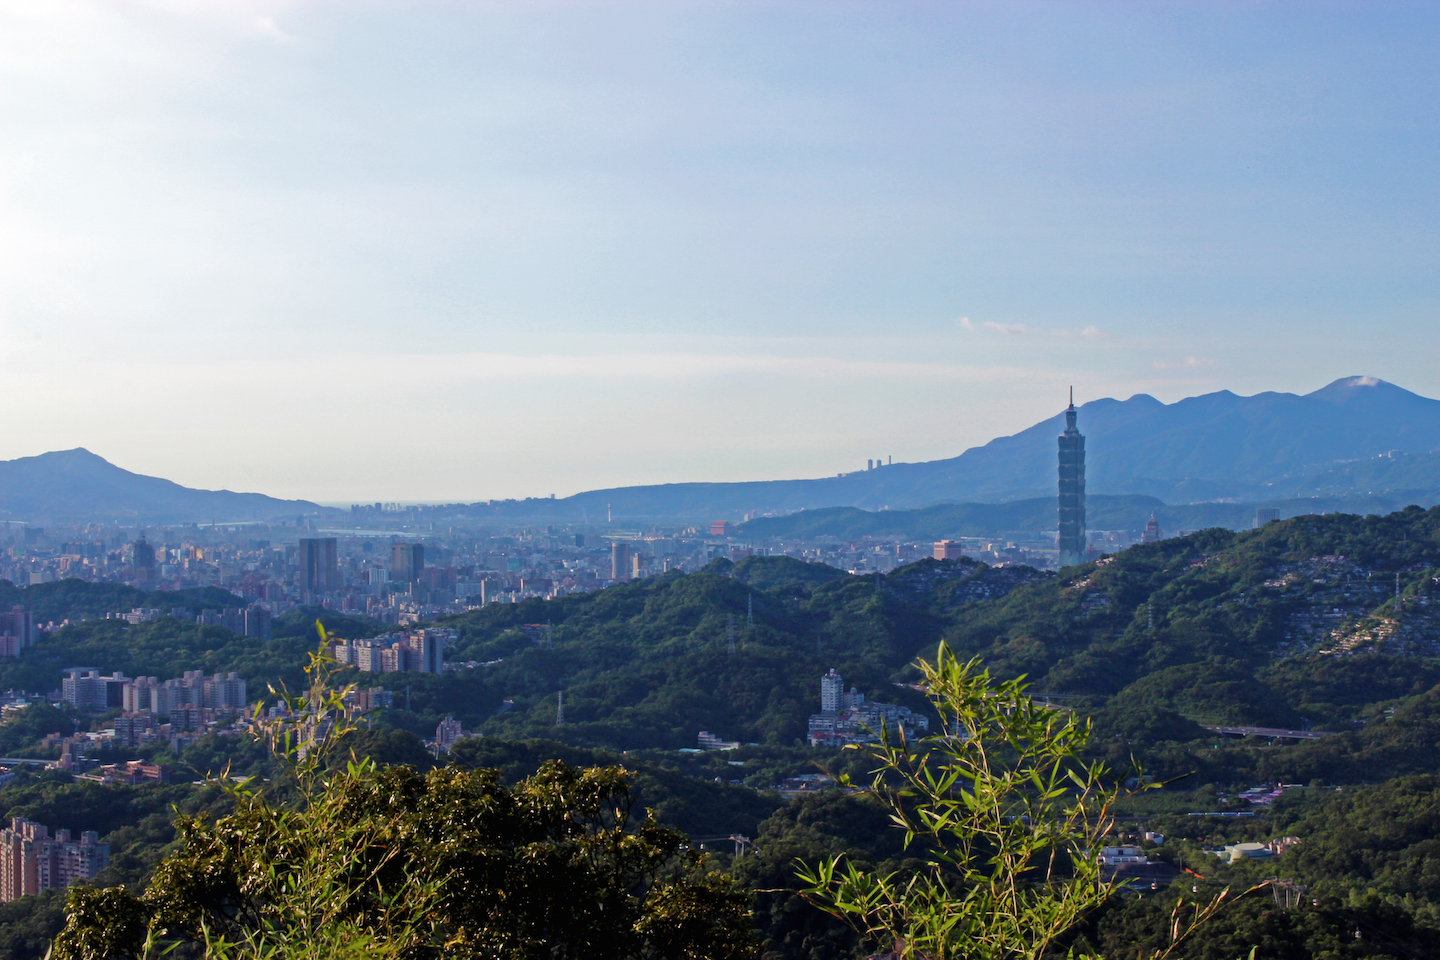 View of Taipei from Maokong Gondola